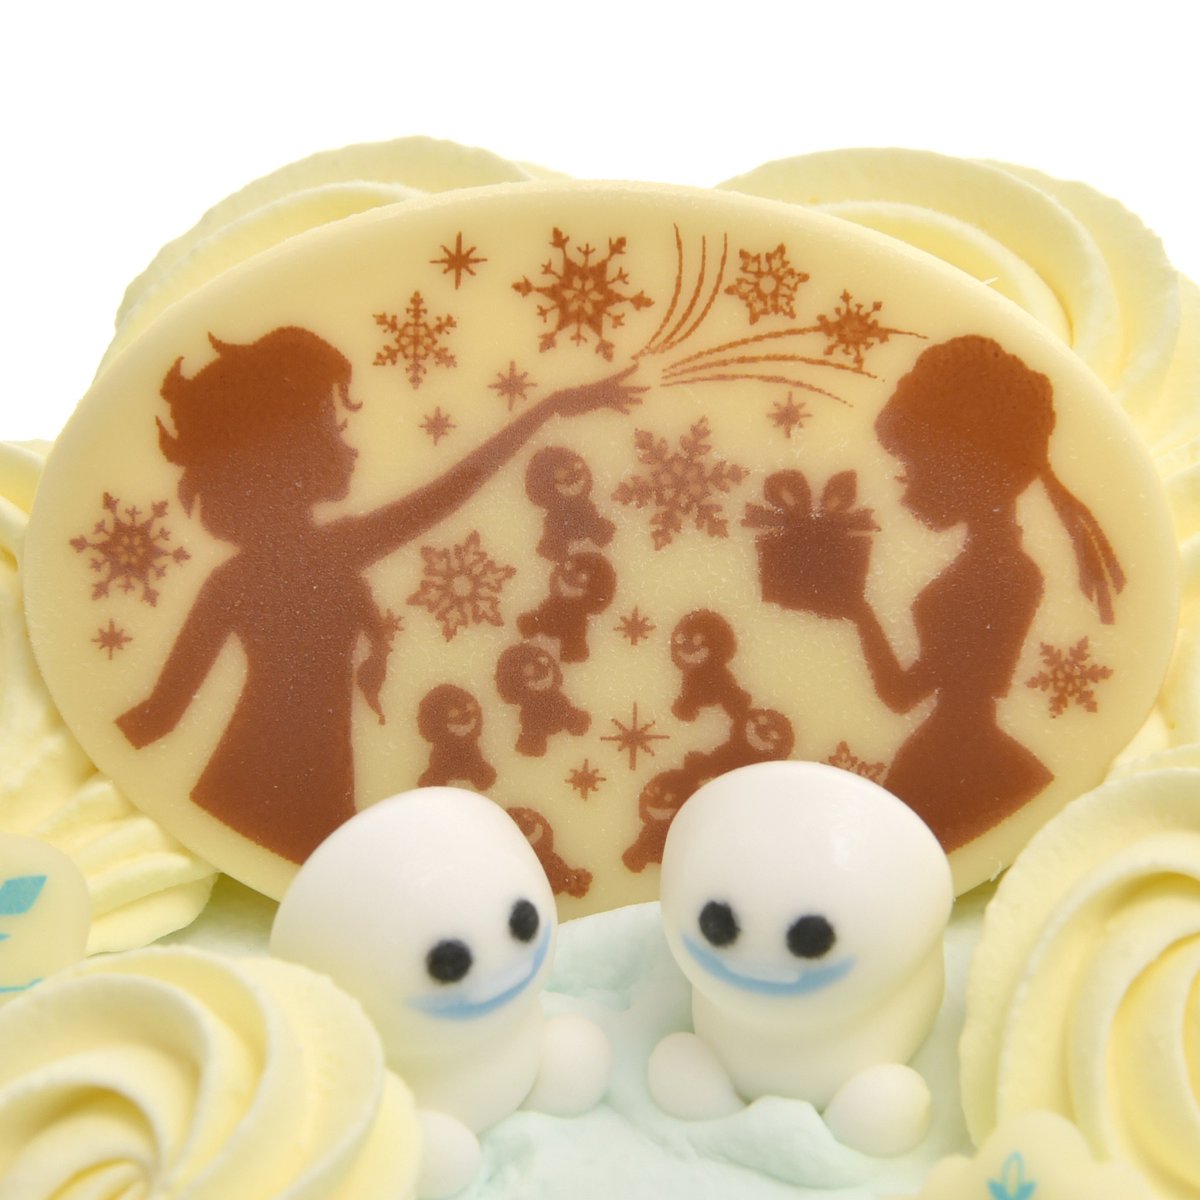 Mezzomikiのディズニーブログ エルサのサプライズでオラフがつまみ食いしたあのケーキを徹底再現 31 アイスクリーム アナと雪の女王サプライズクリスマスケーキ T Co 8ji3dbcmm1 T Co Ak6vgkhvbz